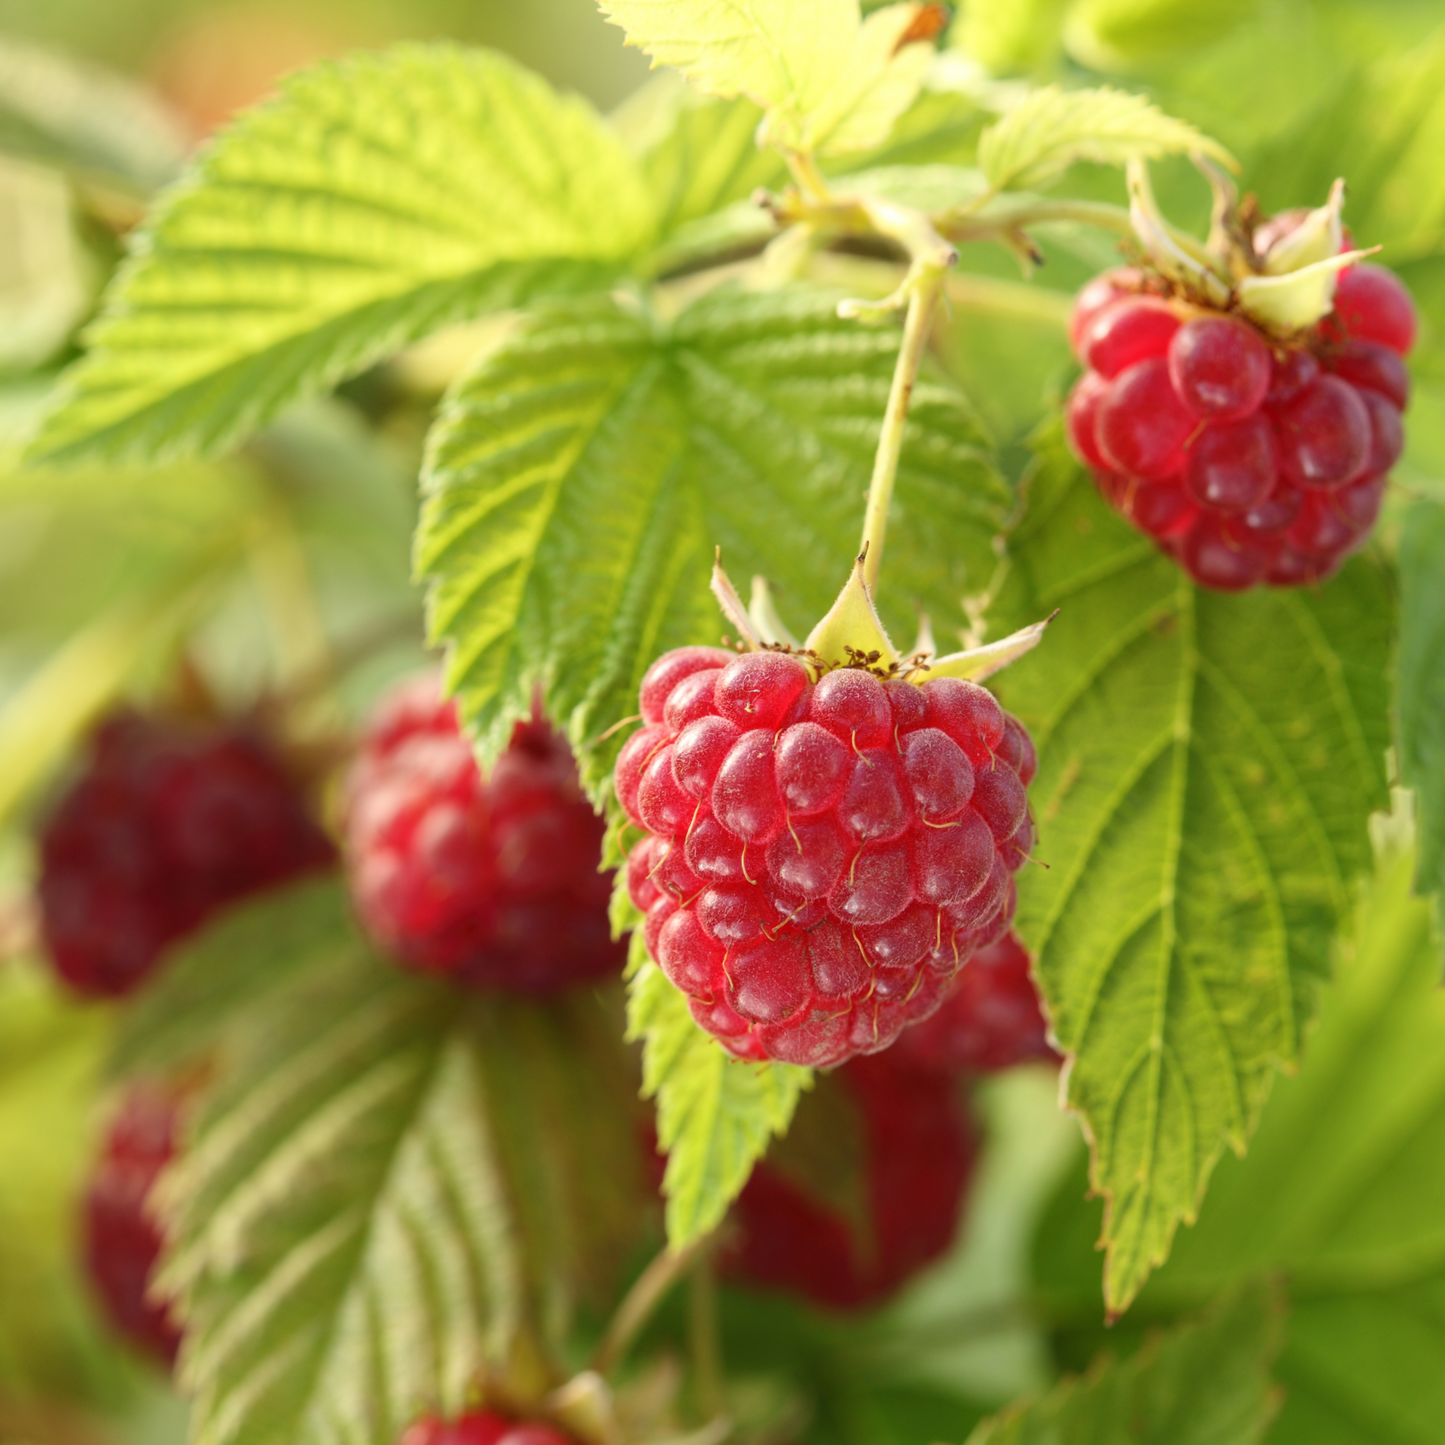 Fruit Plants - Raspberry 'Polka' - 1 x Full Plant in a 2 Litre Pot